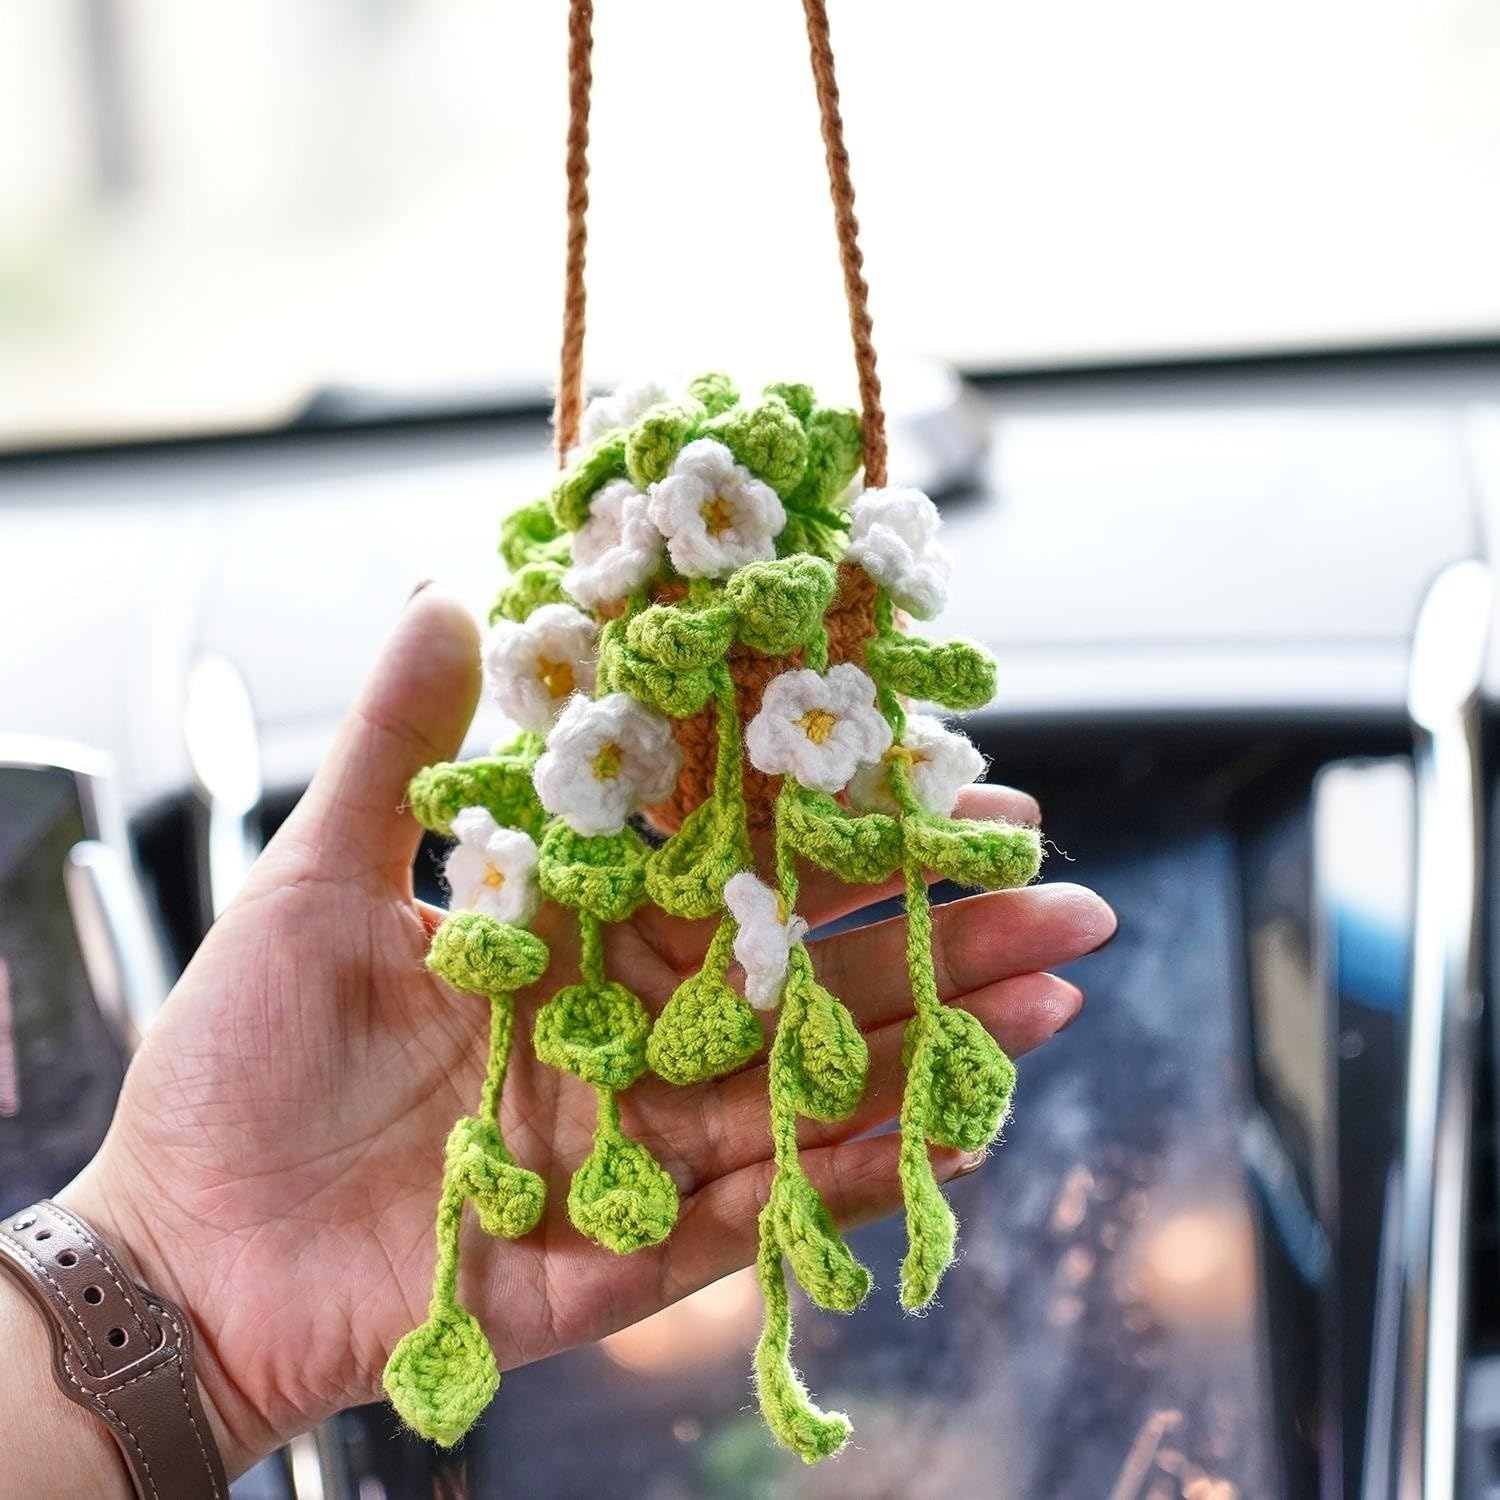 Buy Handmade Crochet Flower Basket, Cute Car Hanging, Potted Plant